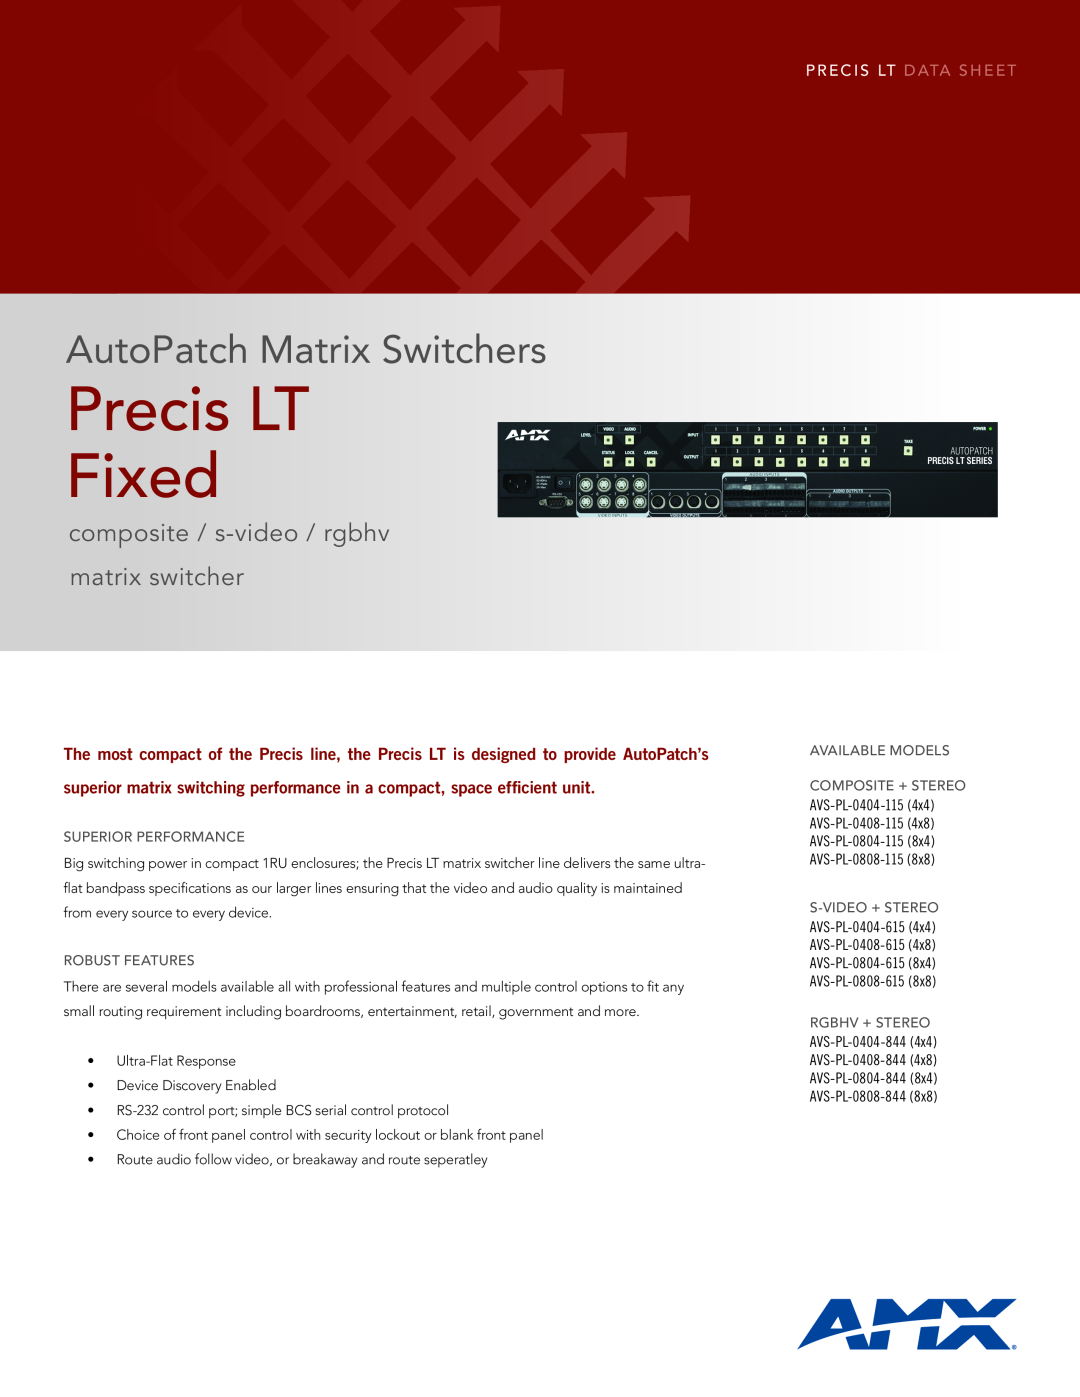 AMX AVS-PL-0808-844, AVS-PL-0808-615, AVS-PL-0808-115 specifications Precis LT Fixed, AutoPatch Matrix Switchers 